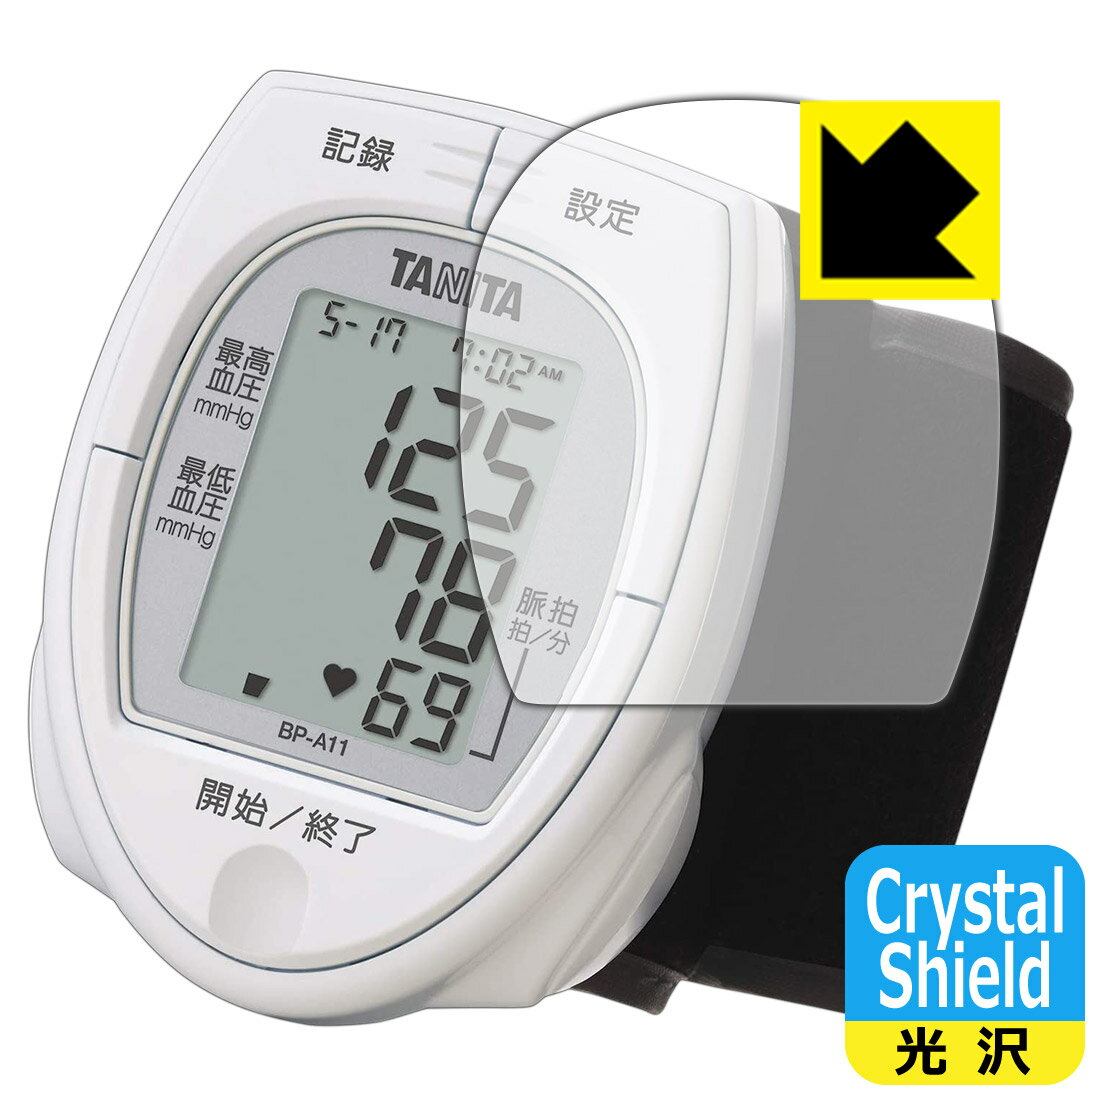 Crystal Shield タニタ手首式血圧計 BP-A11 用 保護フィルム 日本製 自社製造直販